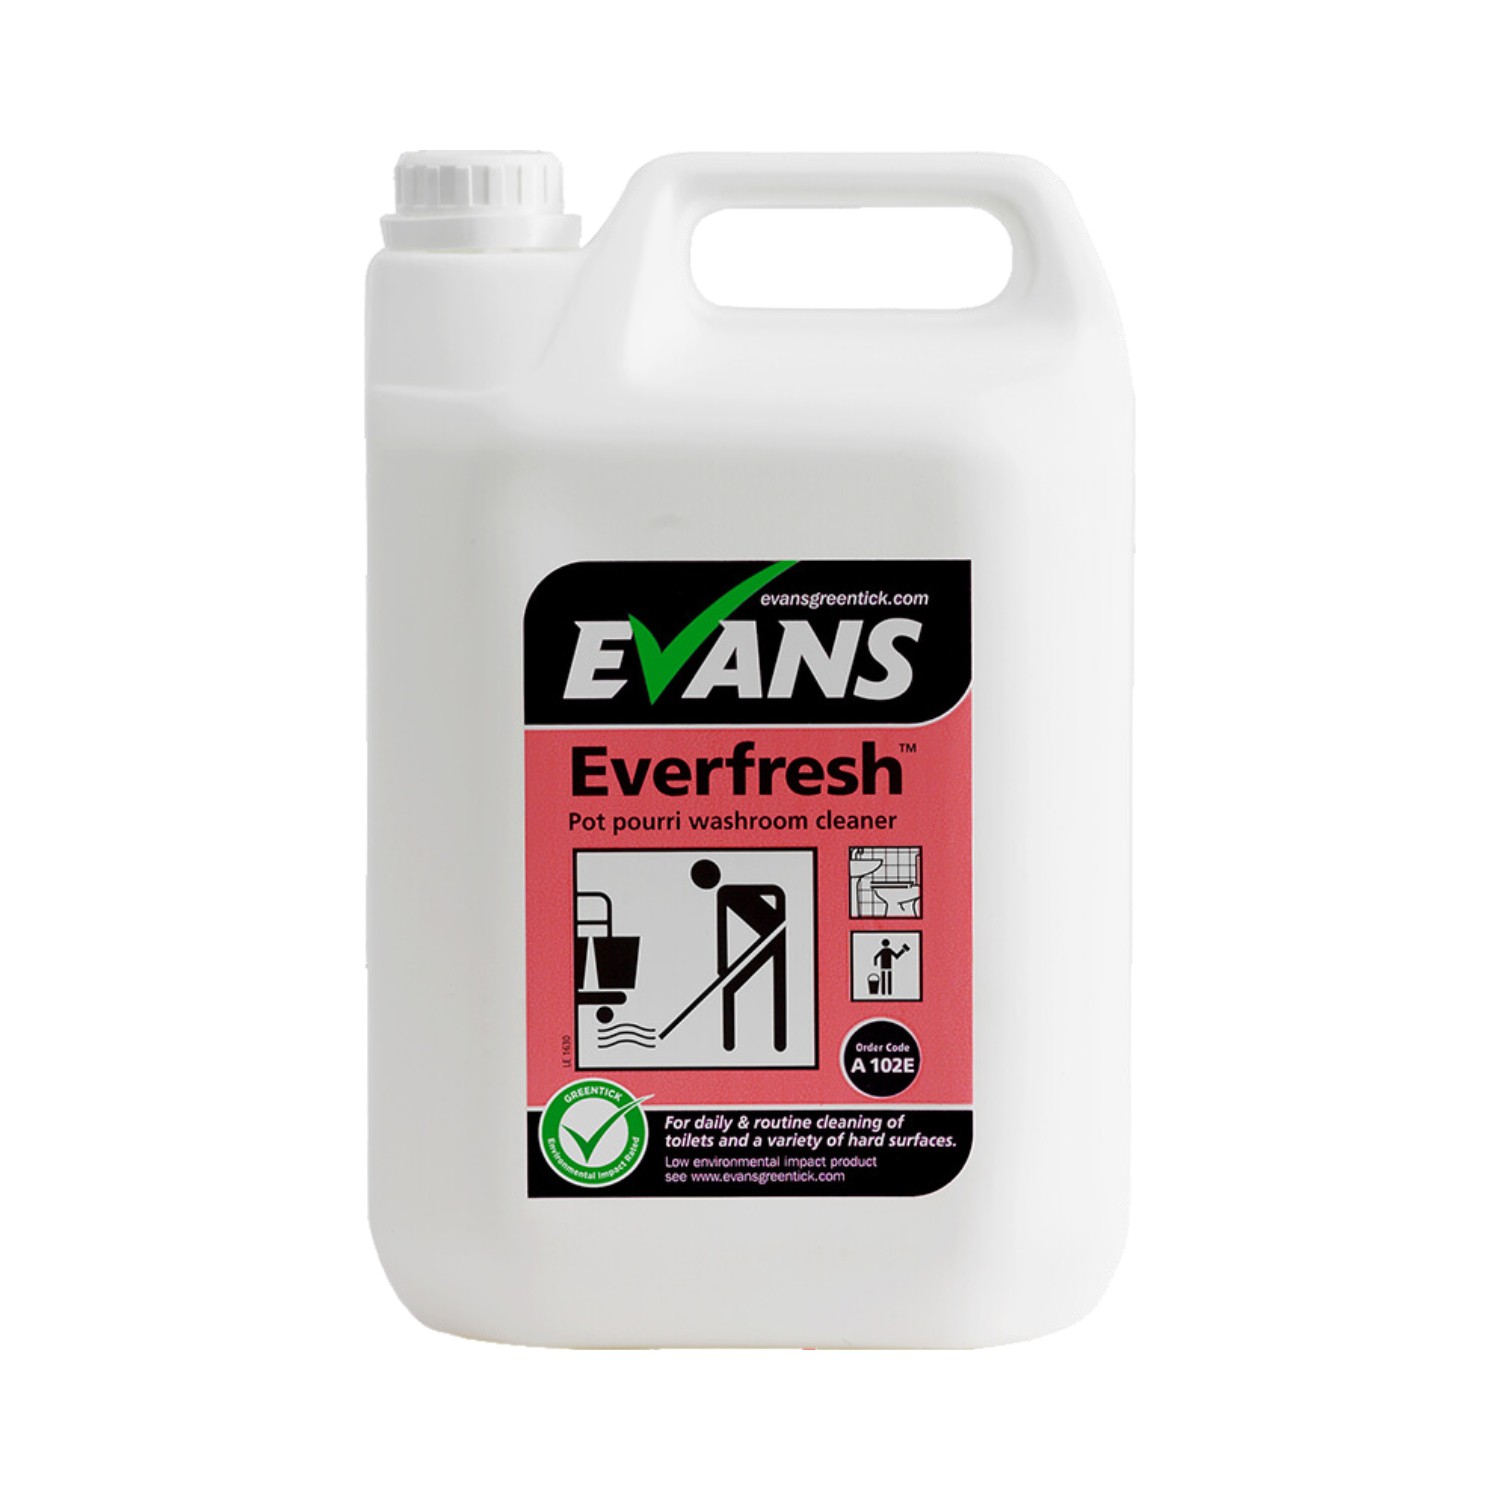 Evans+Everfresh+Pot+Pourri+Washroom+Cleaner+5L